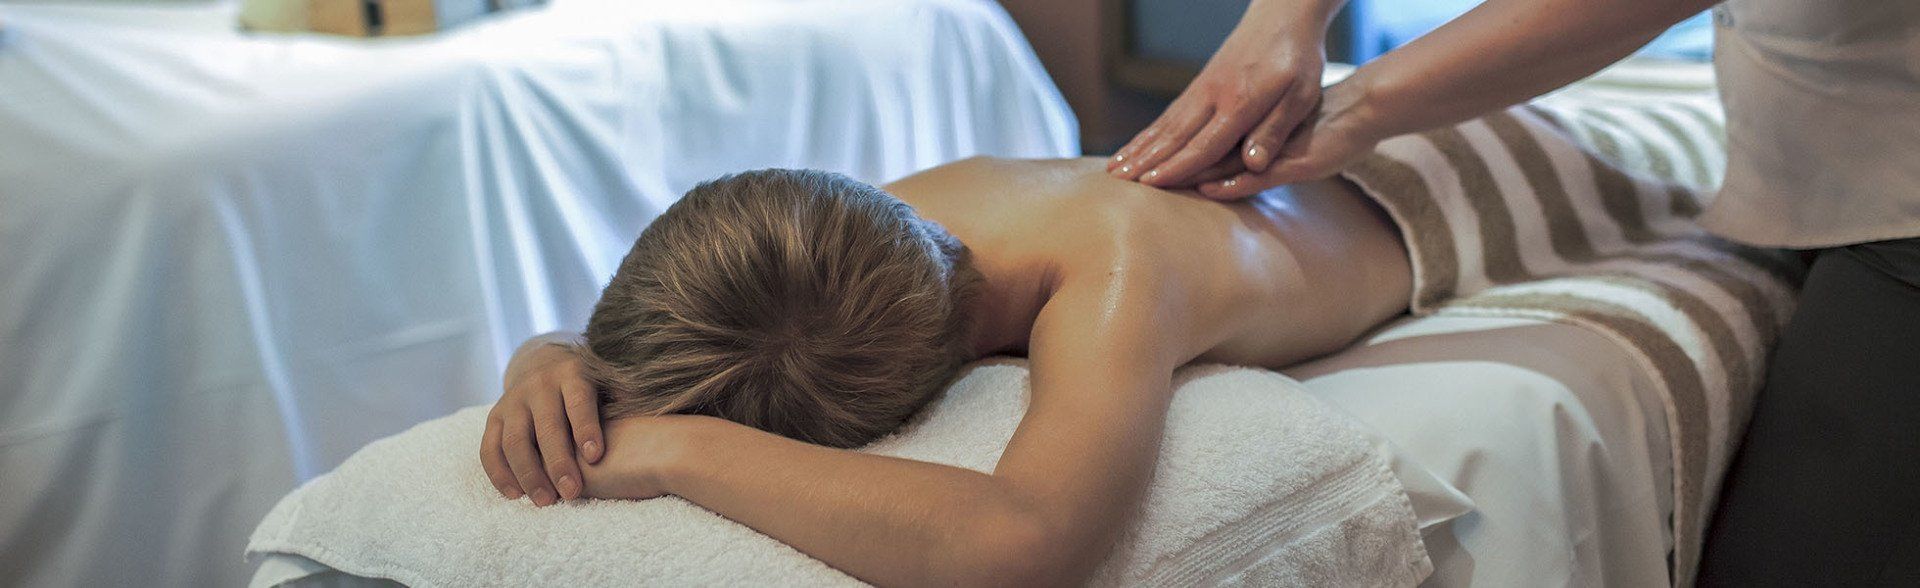 Professional massage therapy